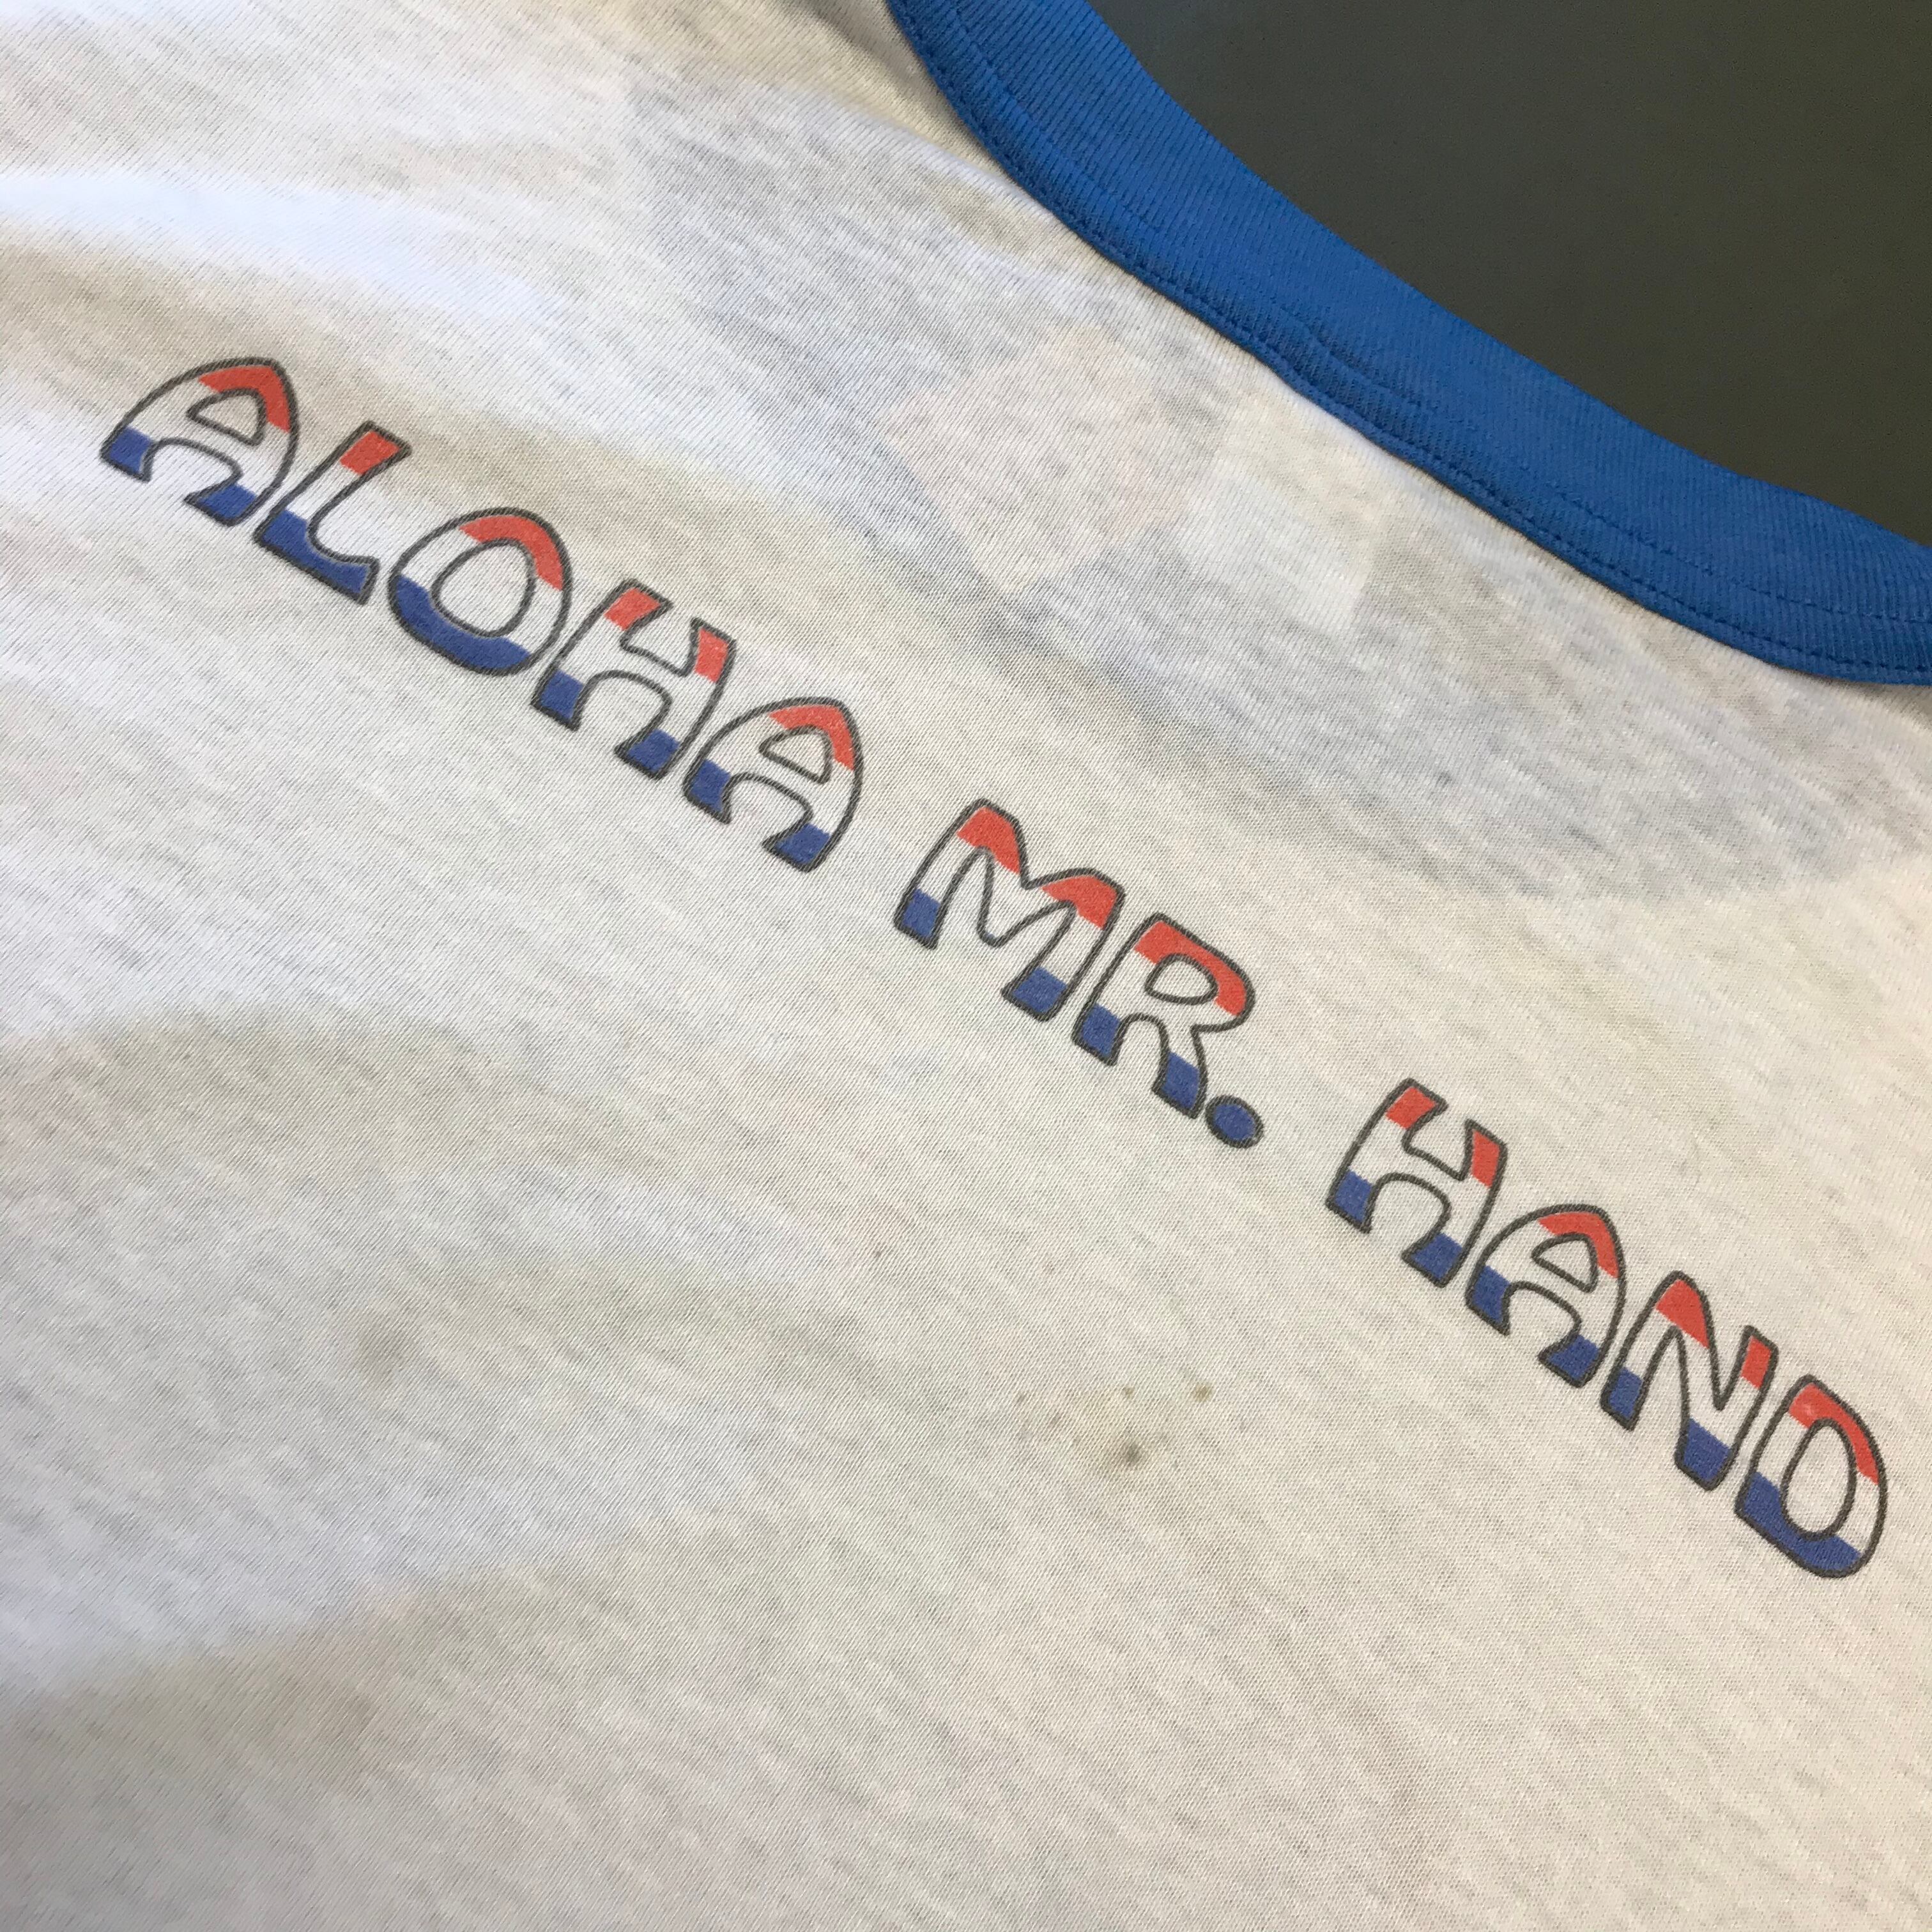 90s Beastie Boys Aloha Mr.Hand リンガーTシャツ